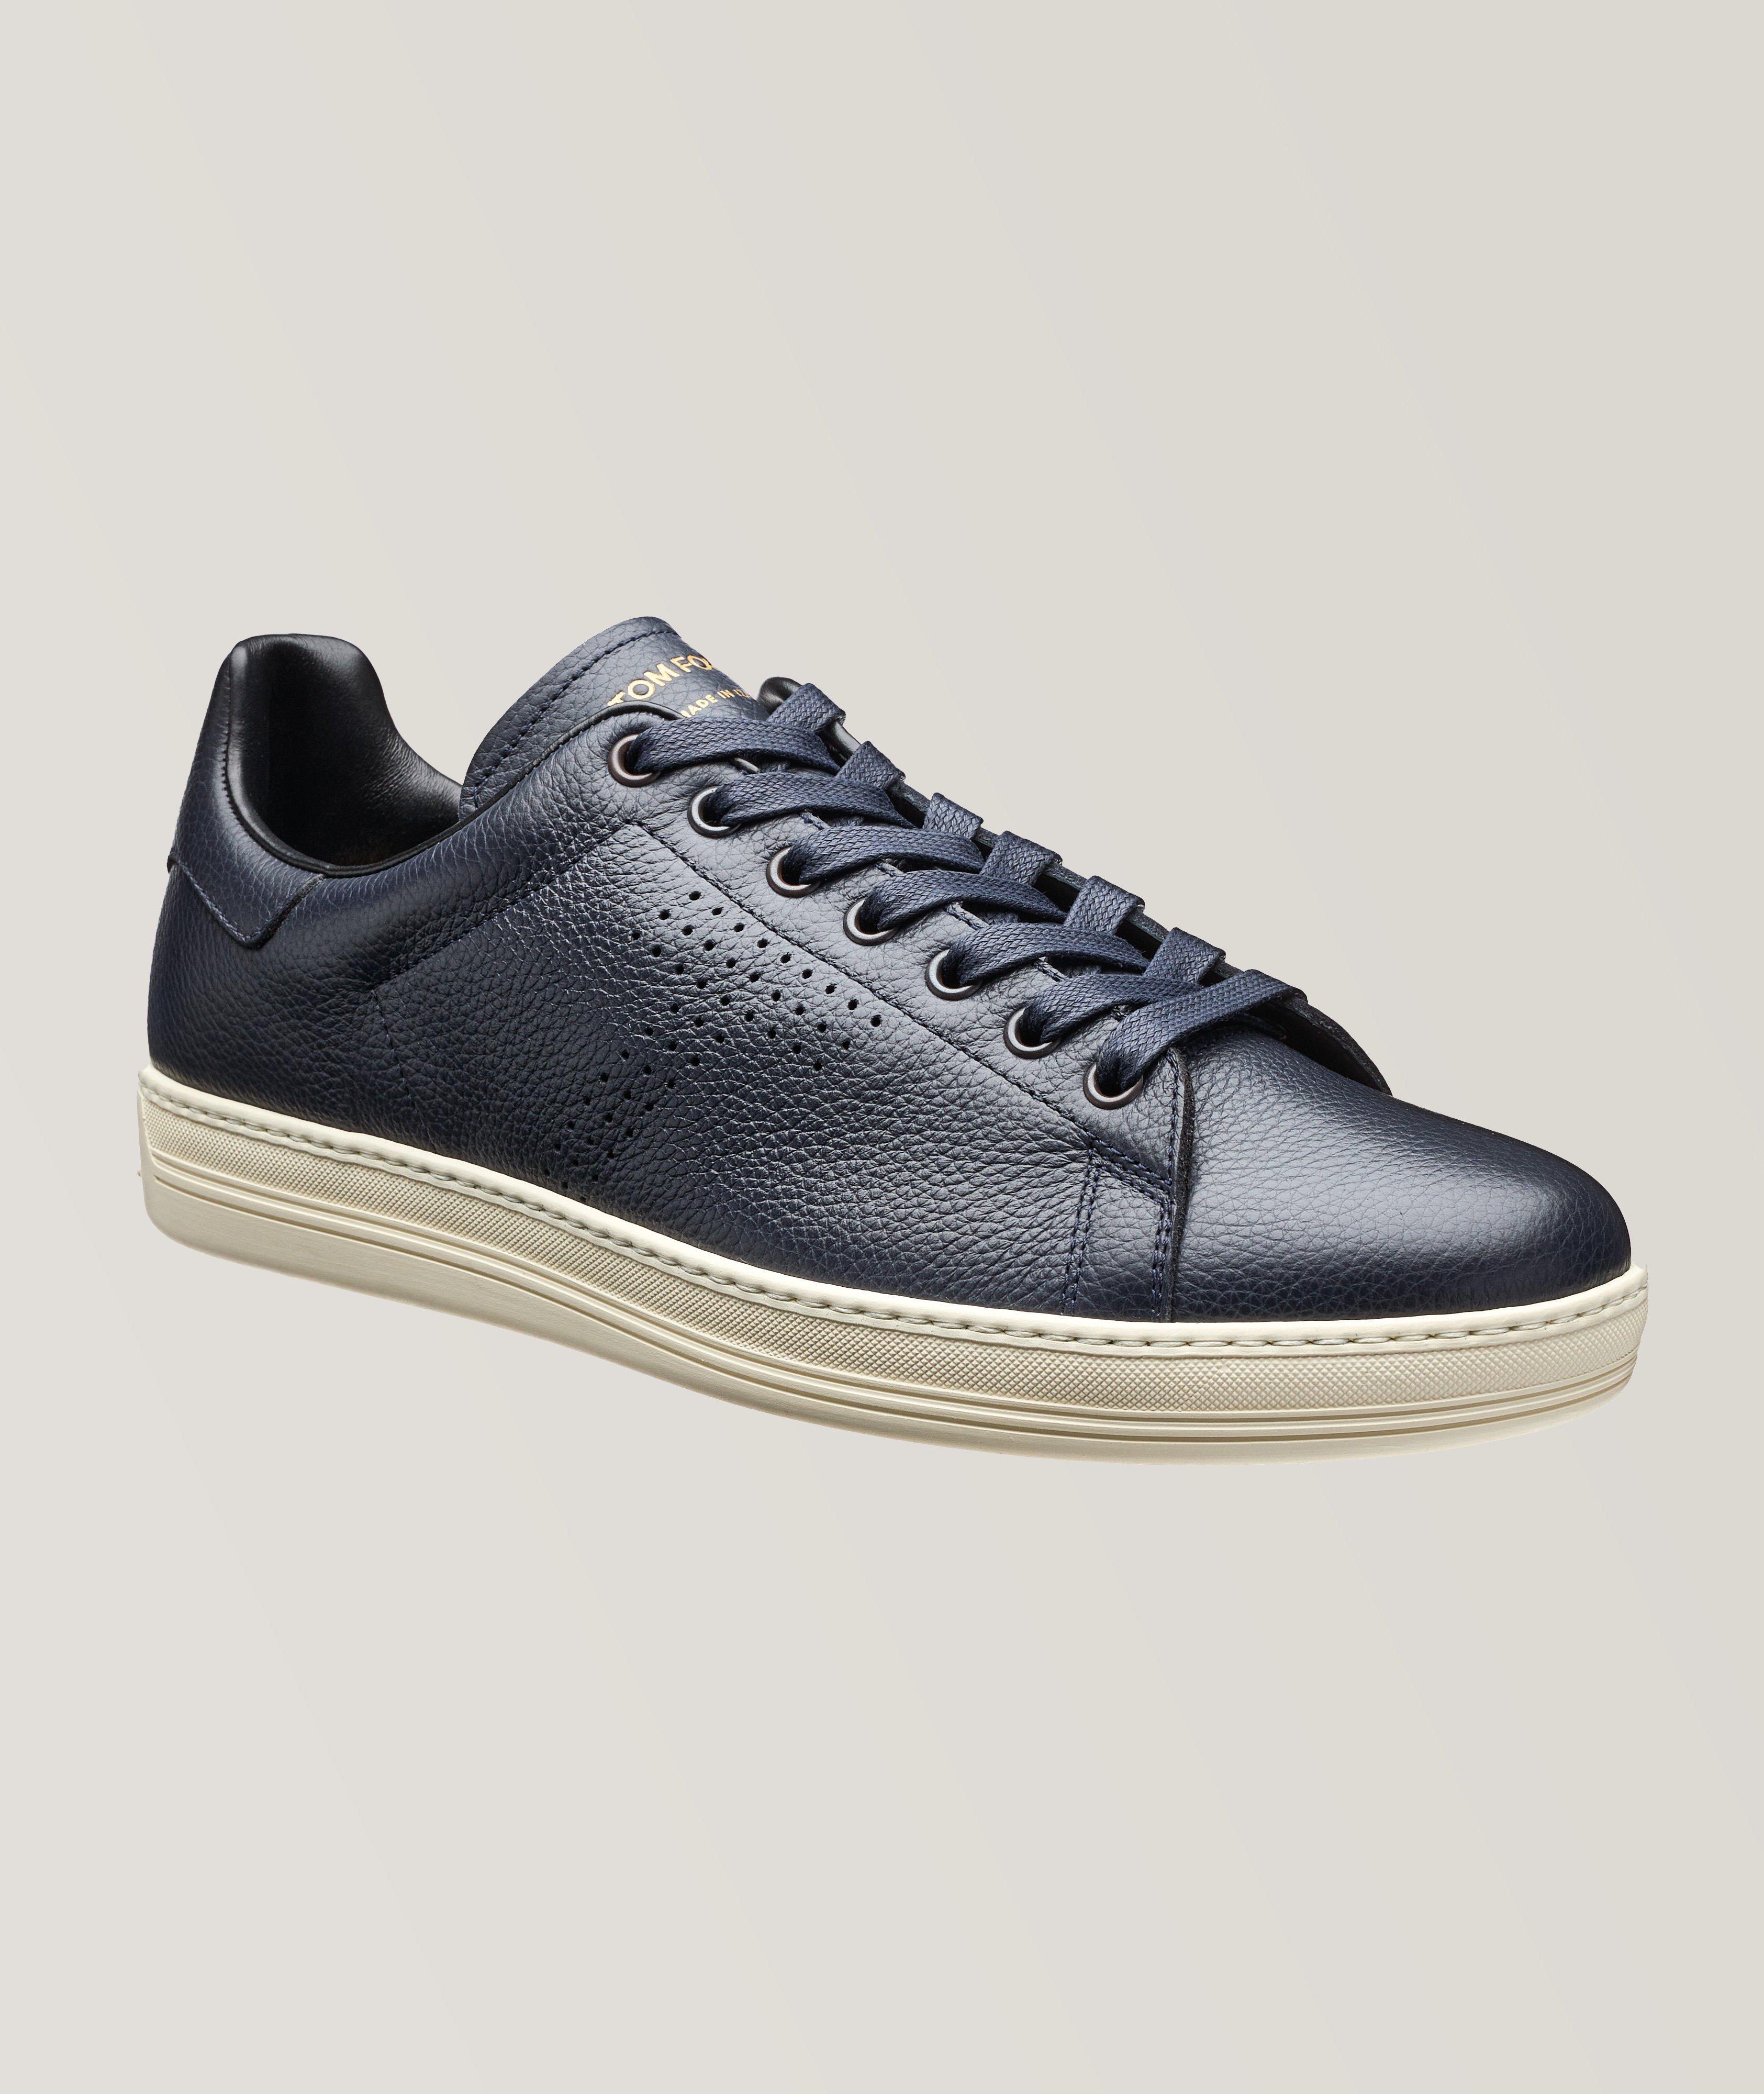 TOM FORD Warwick Leather Sneakers | Sneakers | Harry Rosen